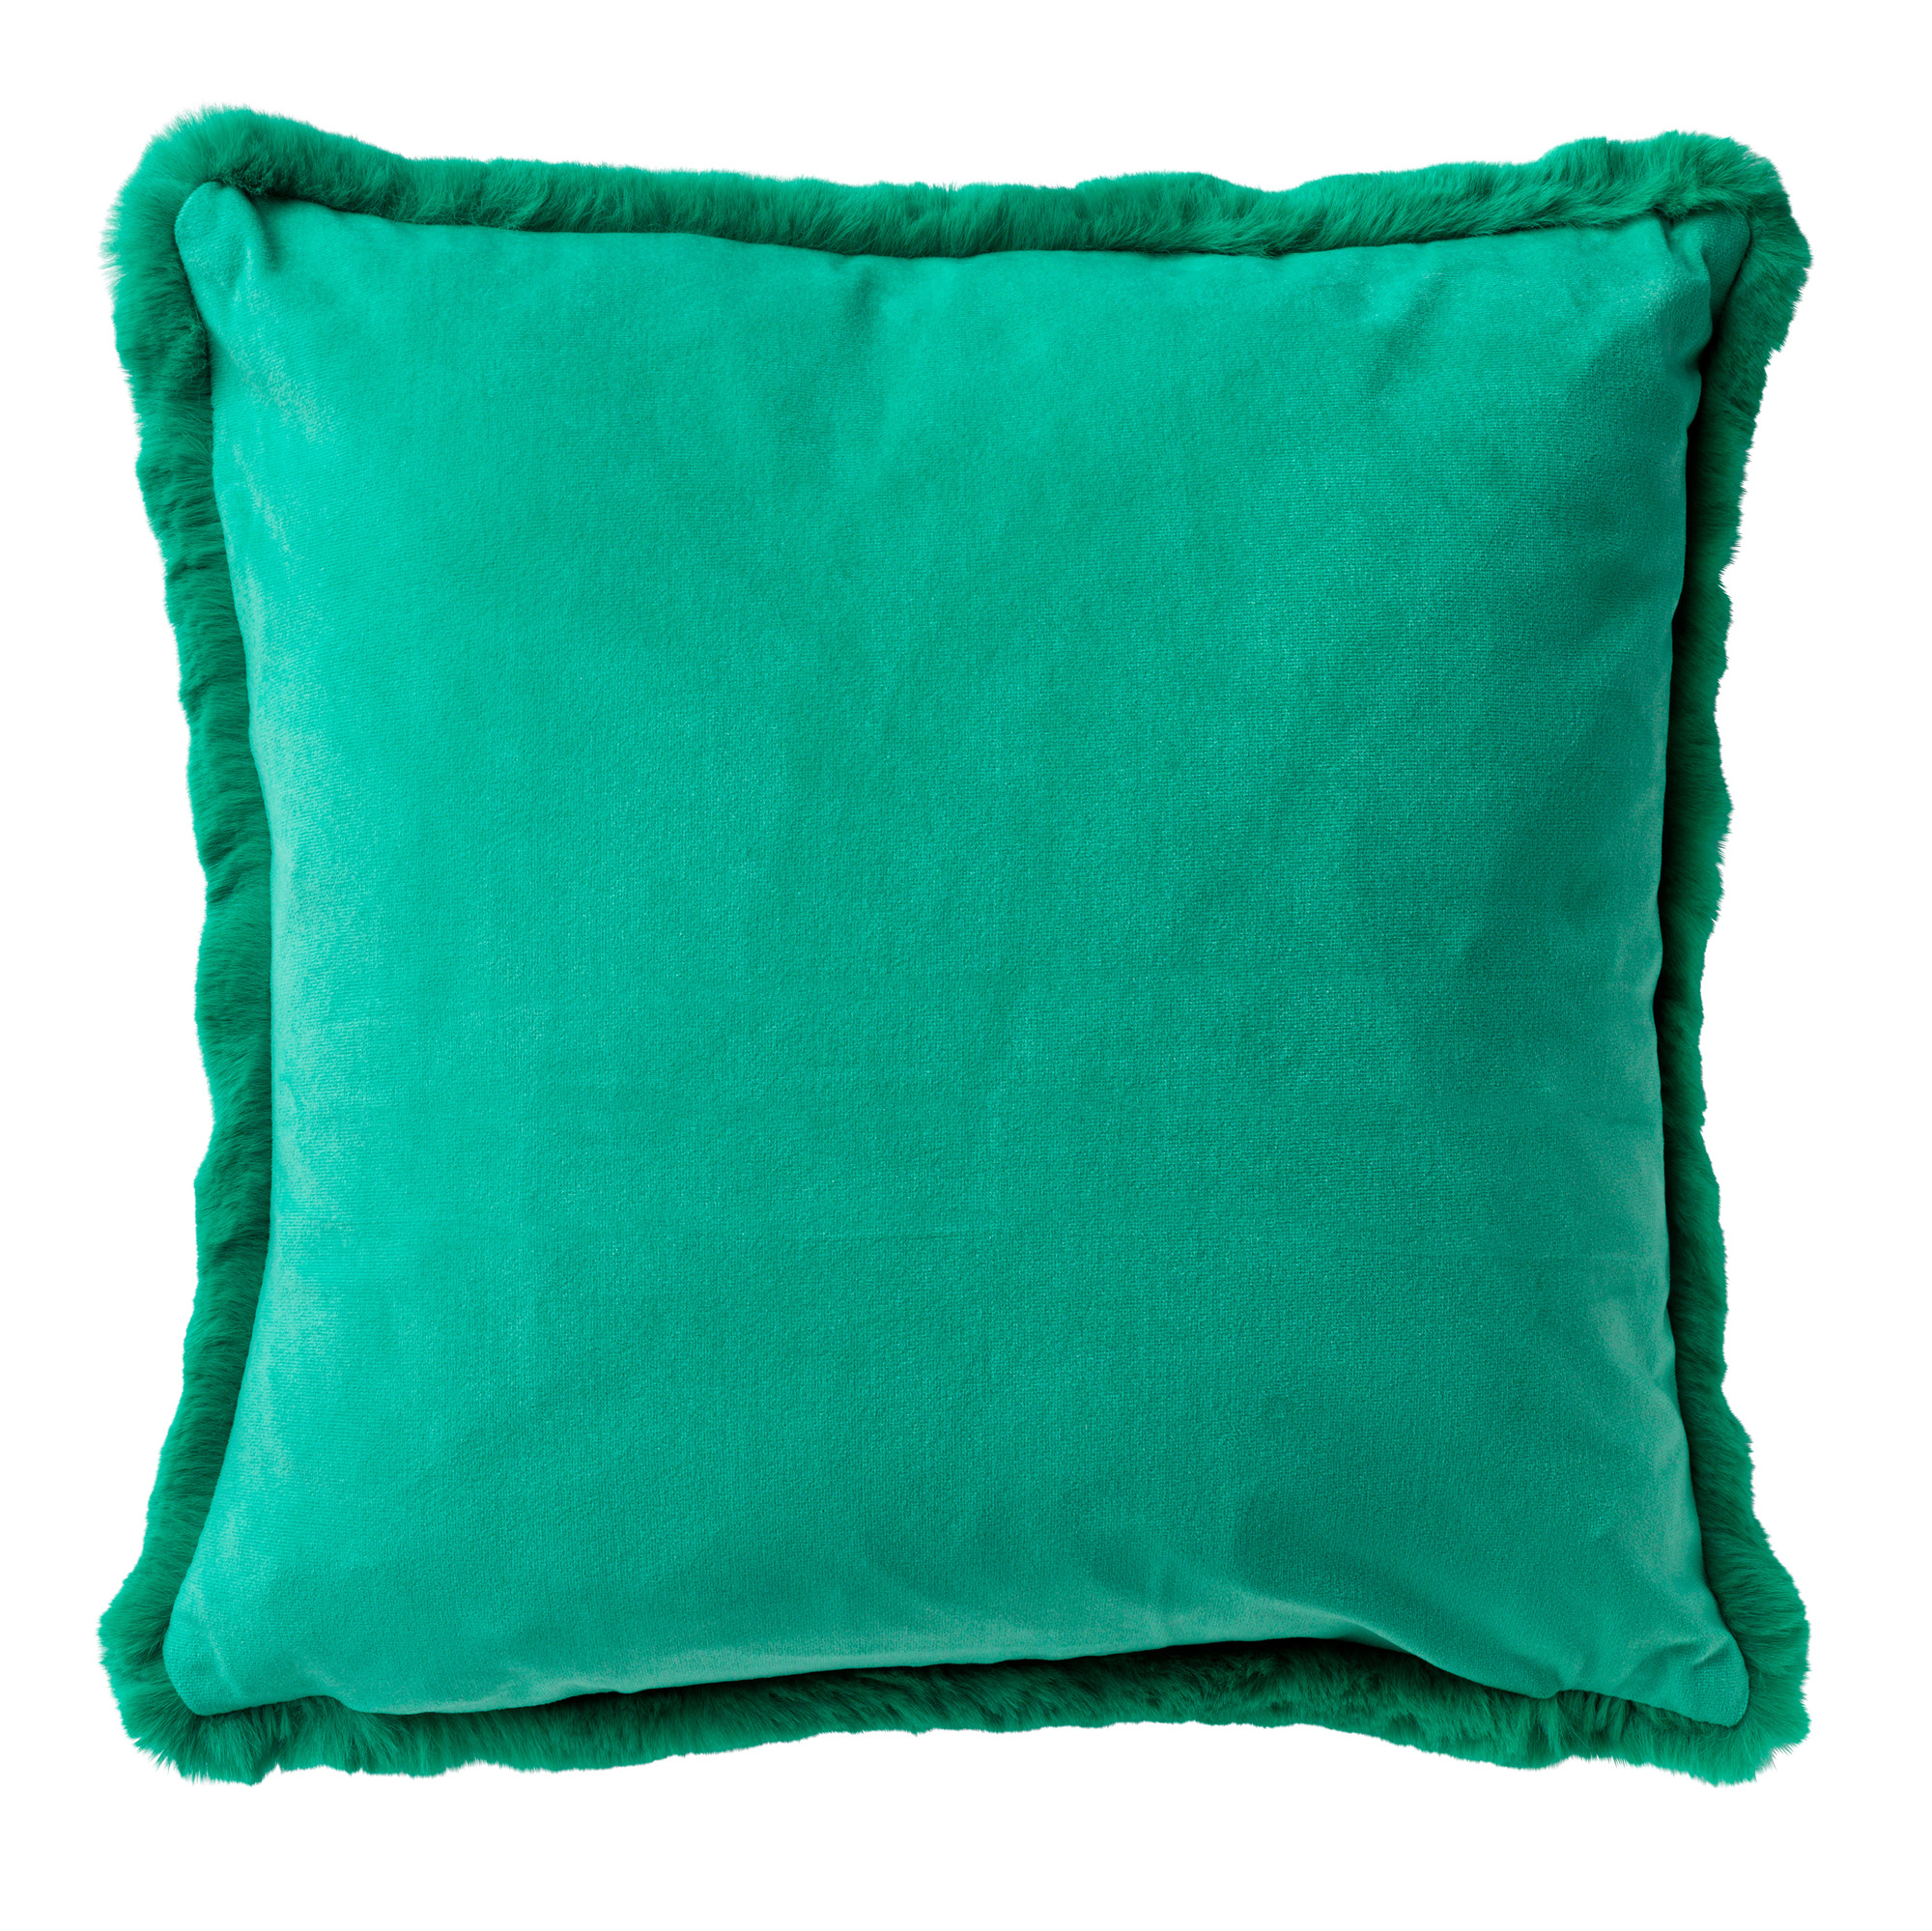 ZAYA - Sierkussen unikleur 45x45 cm - Emerald - groen - superzacht